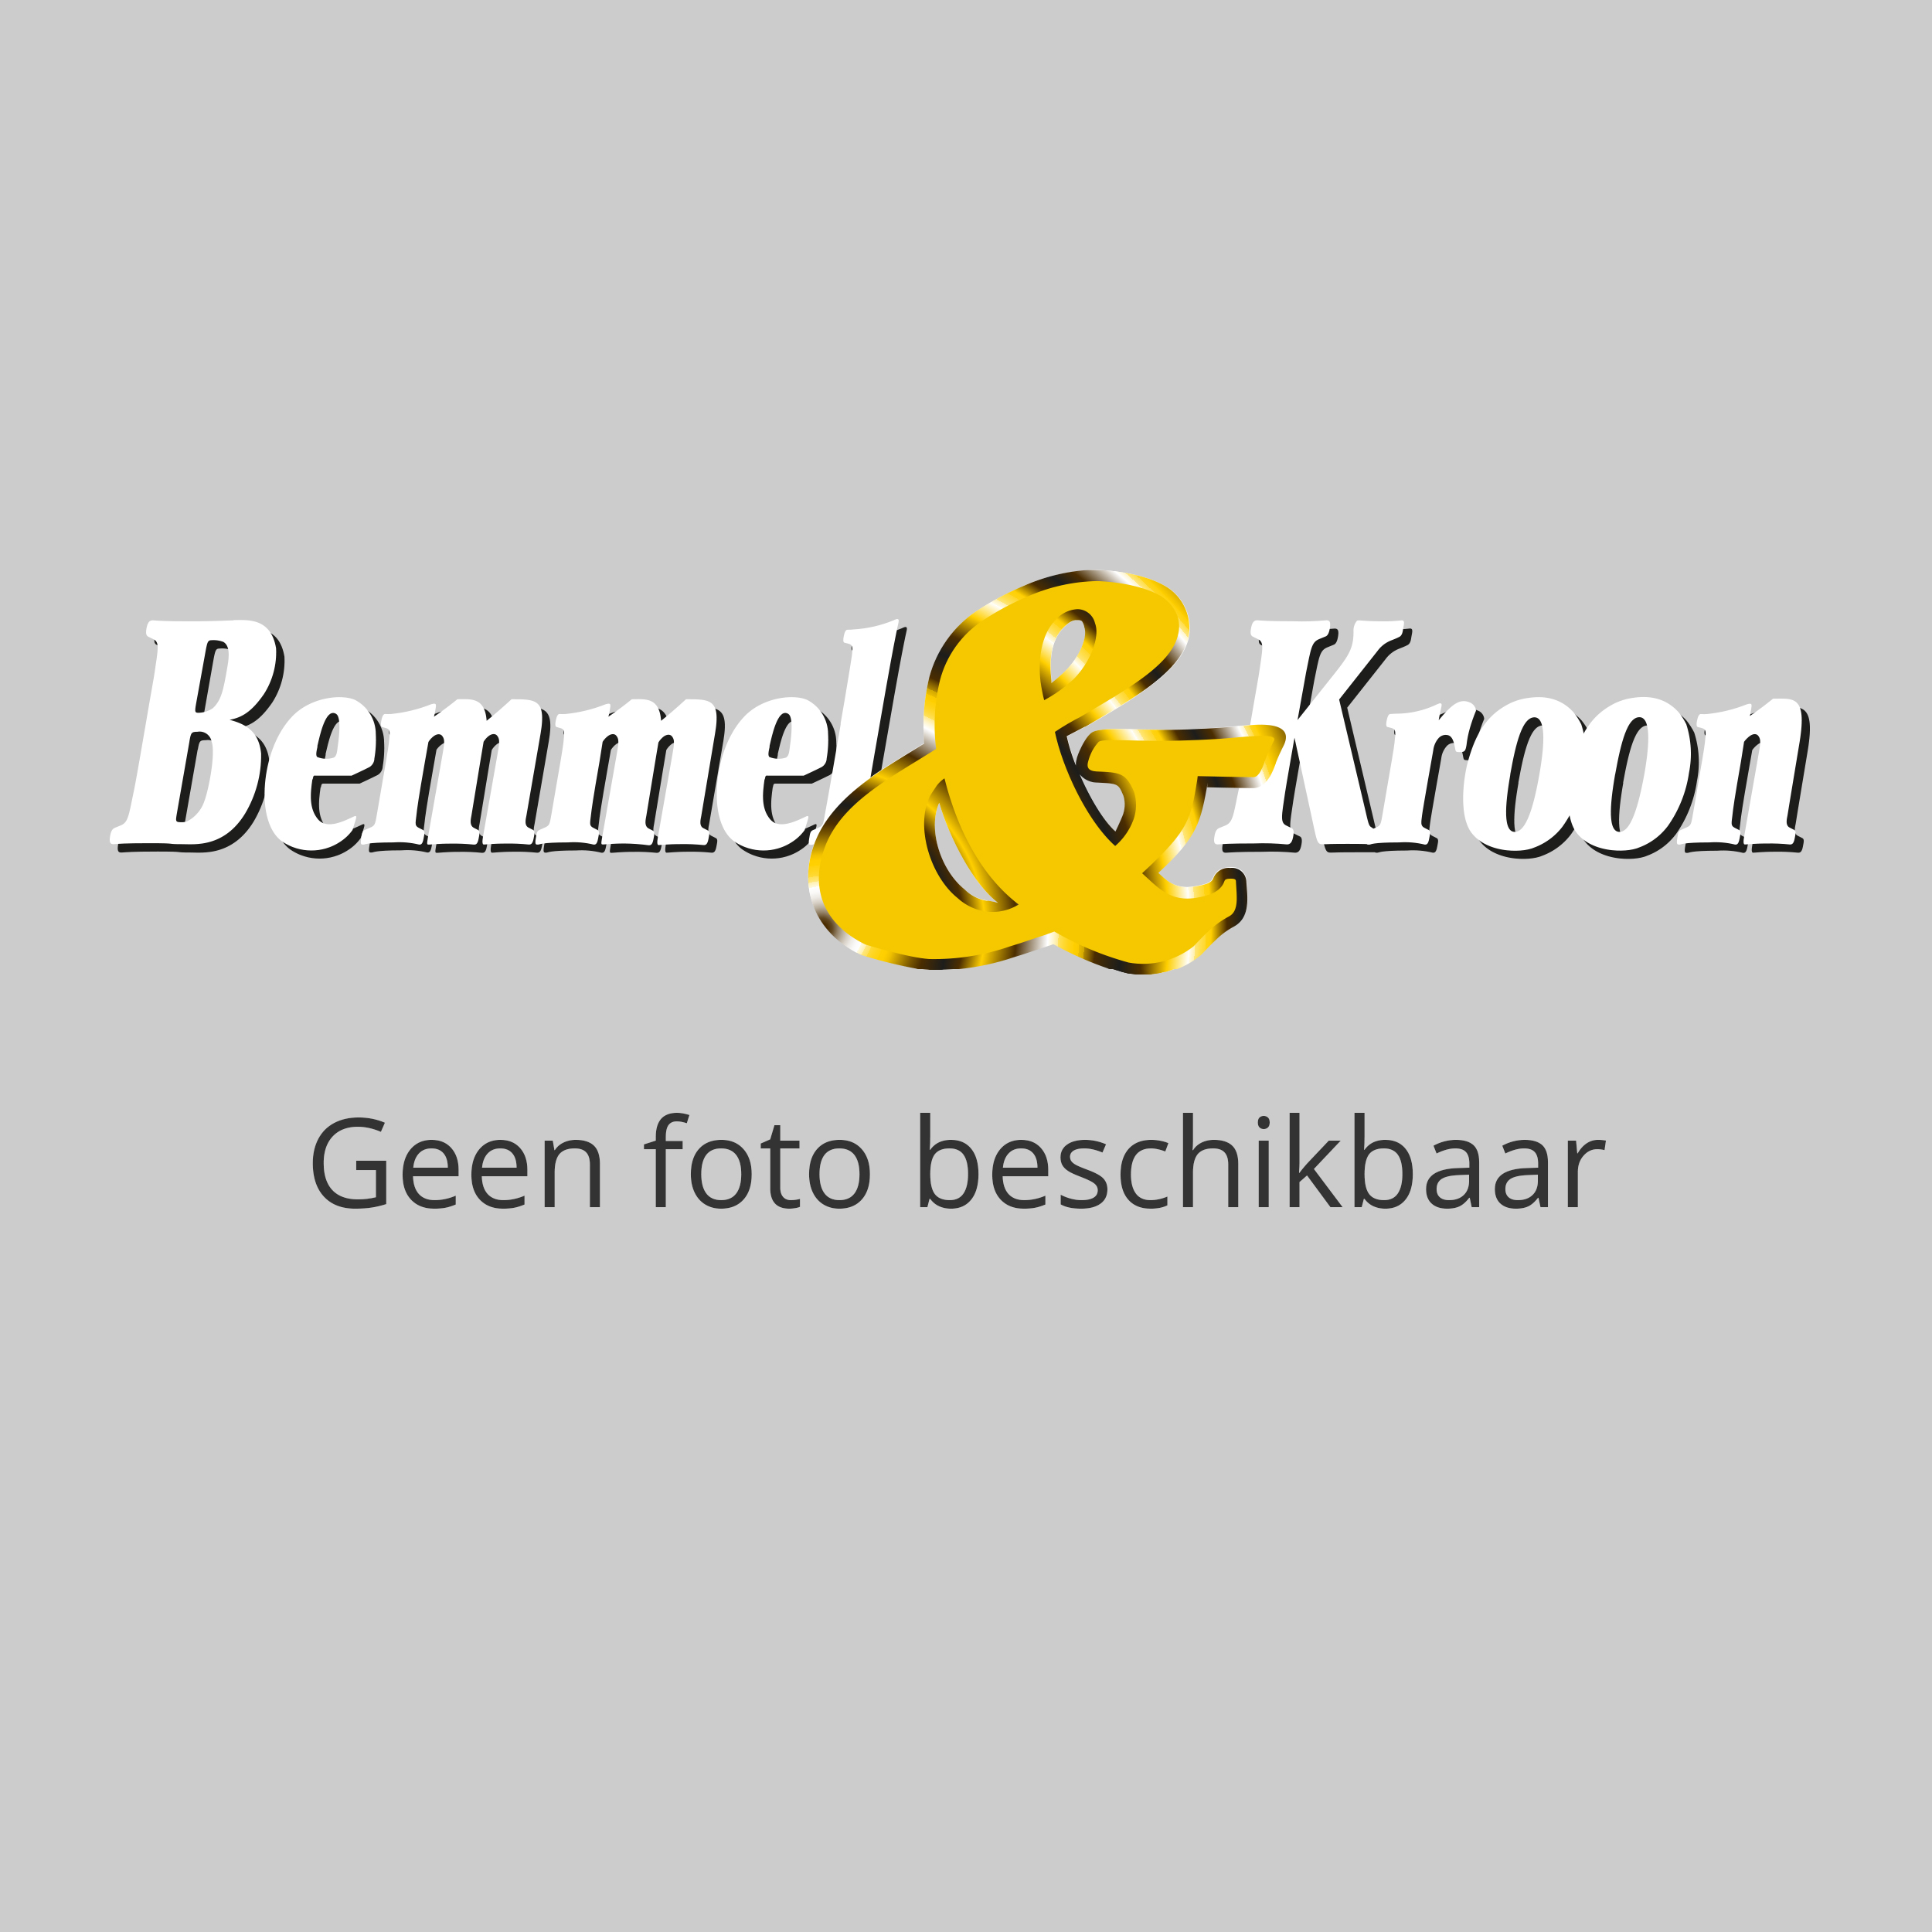 De controle krijgen Springen Ondeugd AEG DVB5960HG - Laagste prijs | Bemmel & Kroon